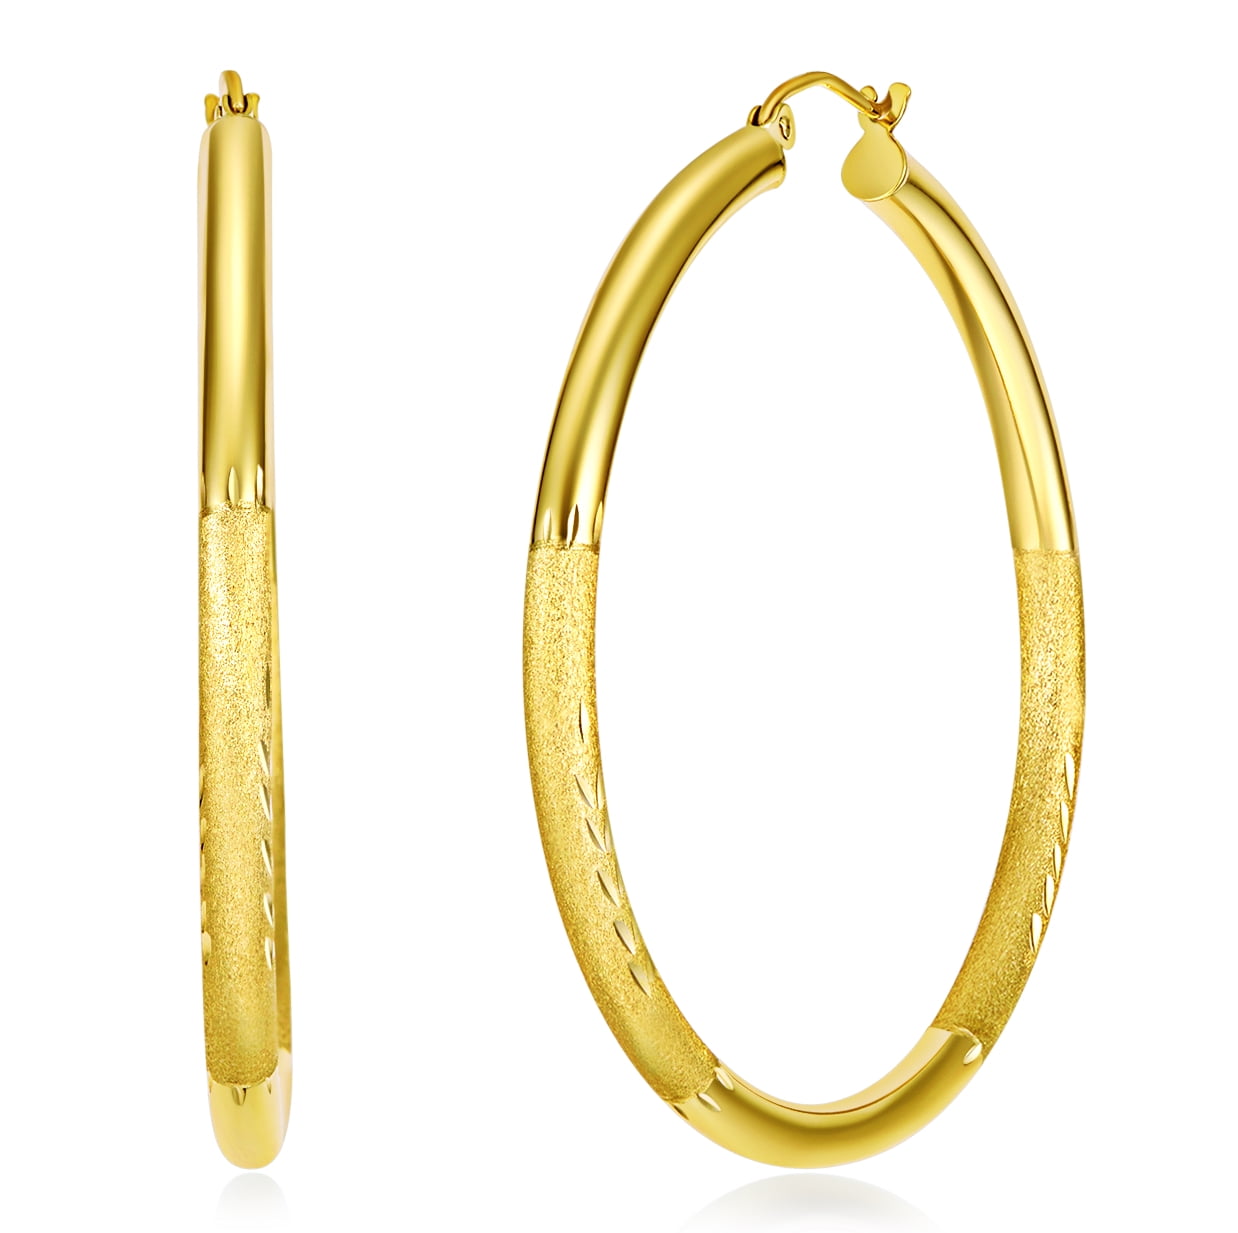 19mm Diameter Wellingsale Ladies 14k Yellow Gold Polished 3mm Classic Hoop Earrings 